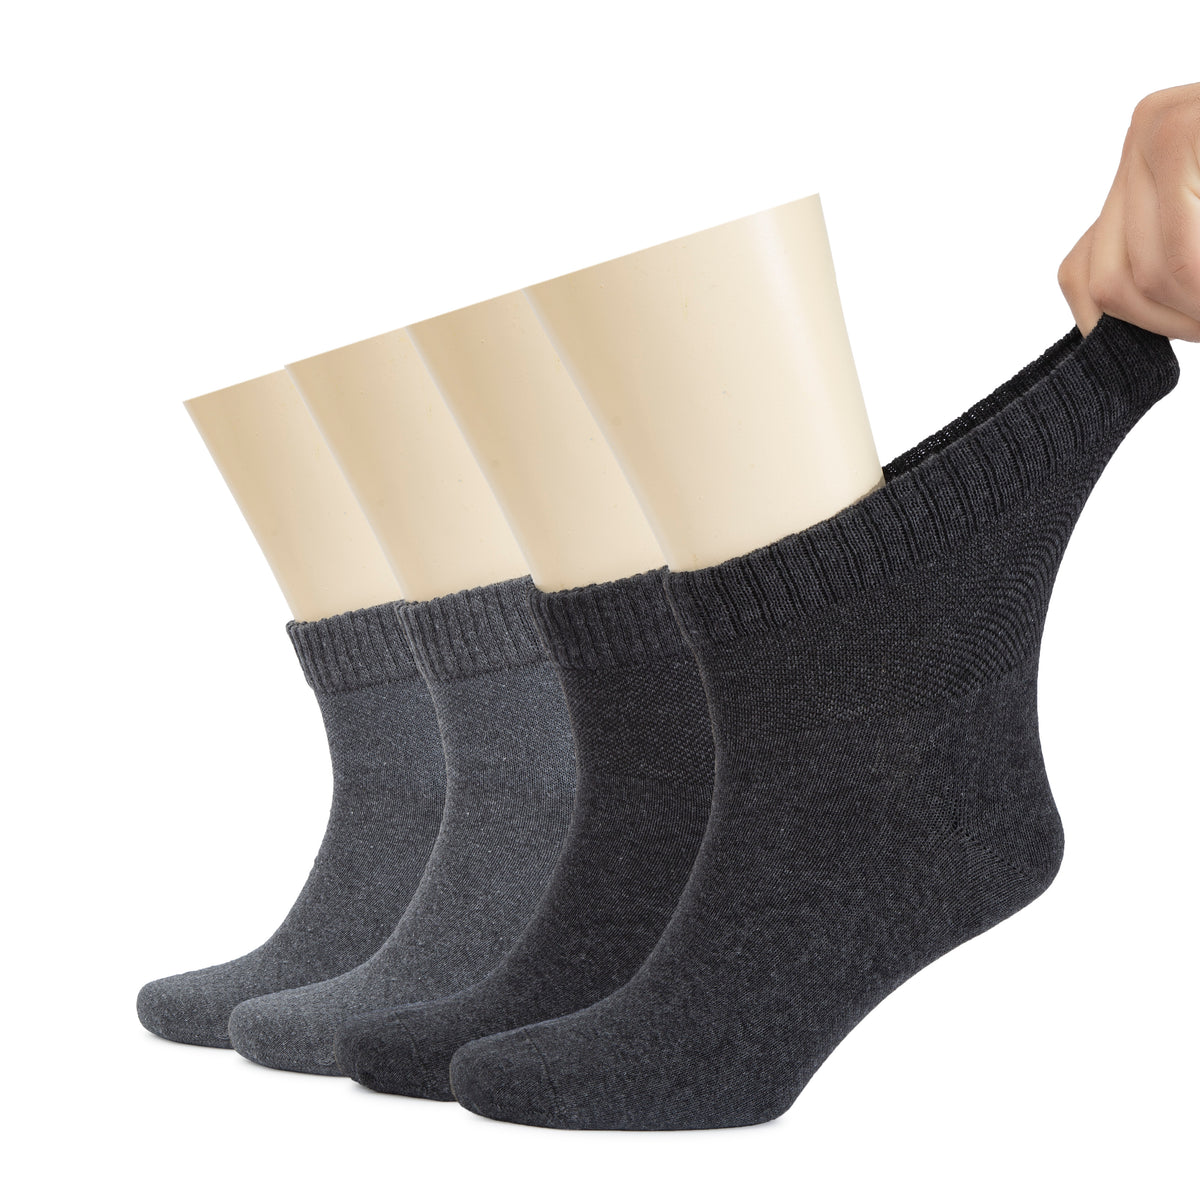 Men's Diabetic Ankle Thin Cotton Socks, 4 Pairs